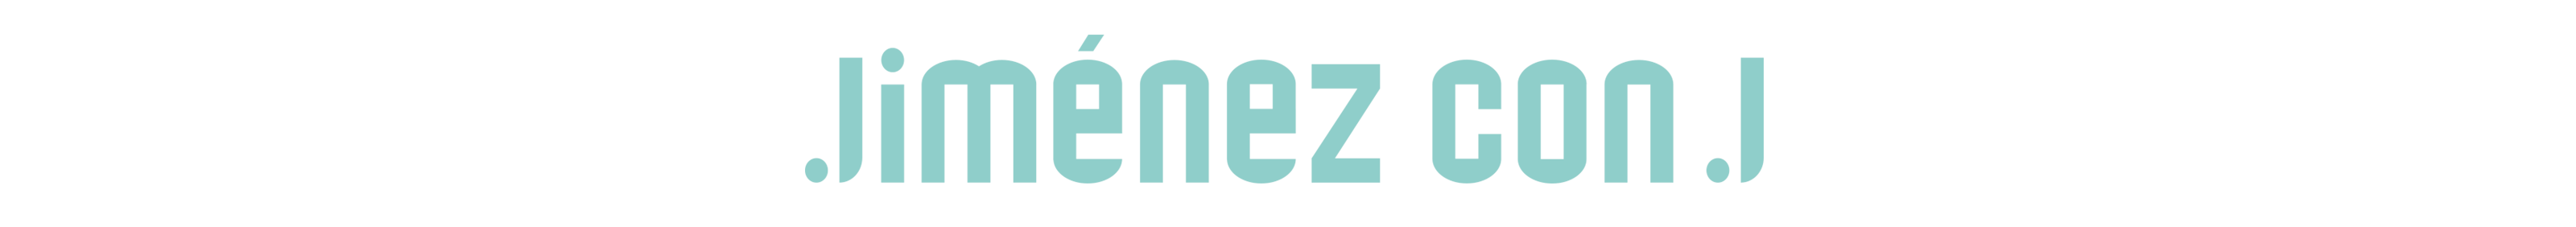 Jimenez conj's profile banner